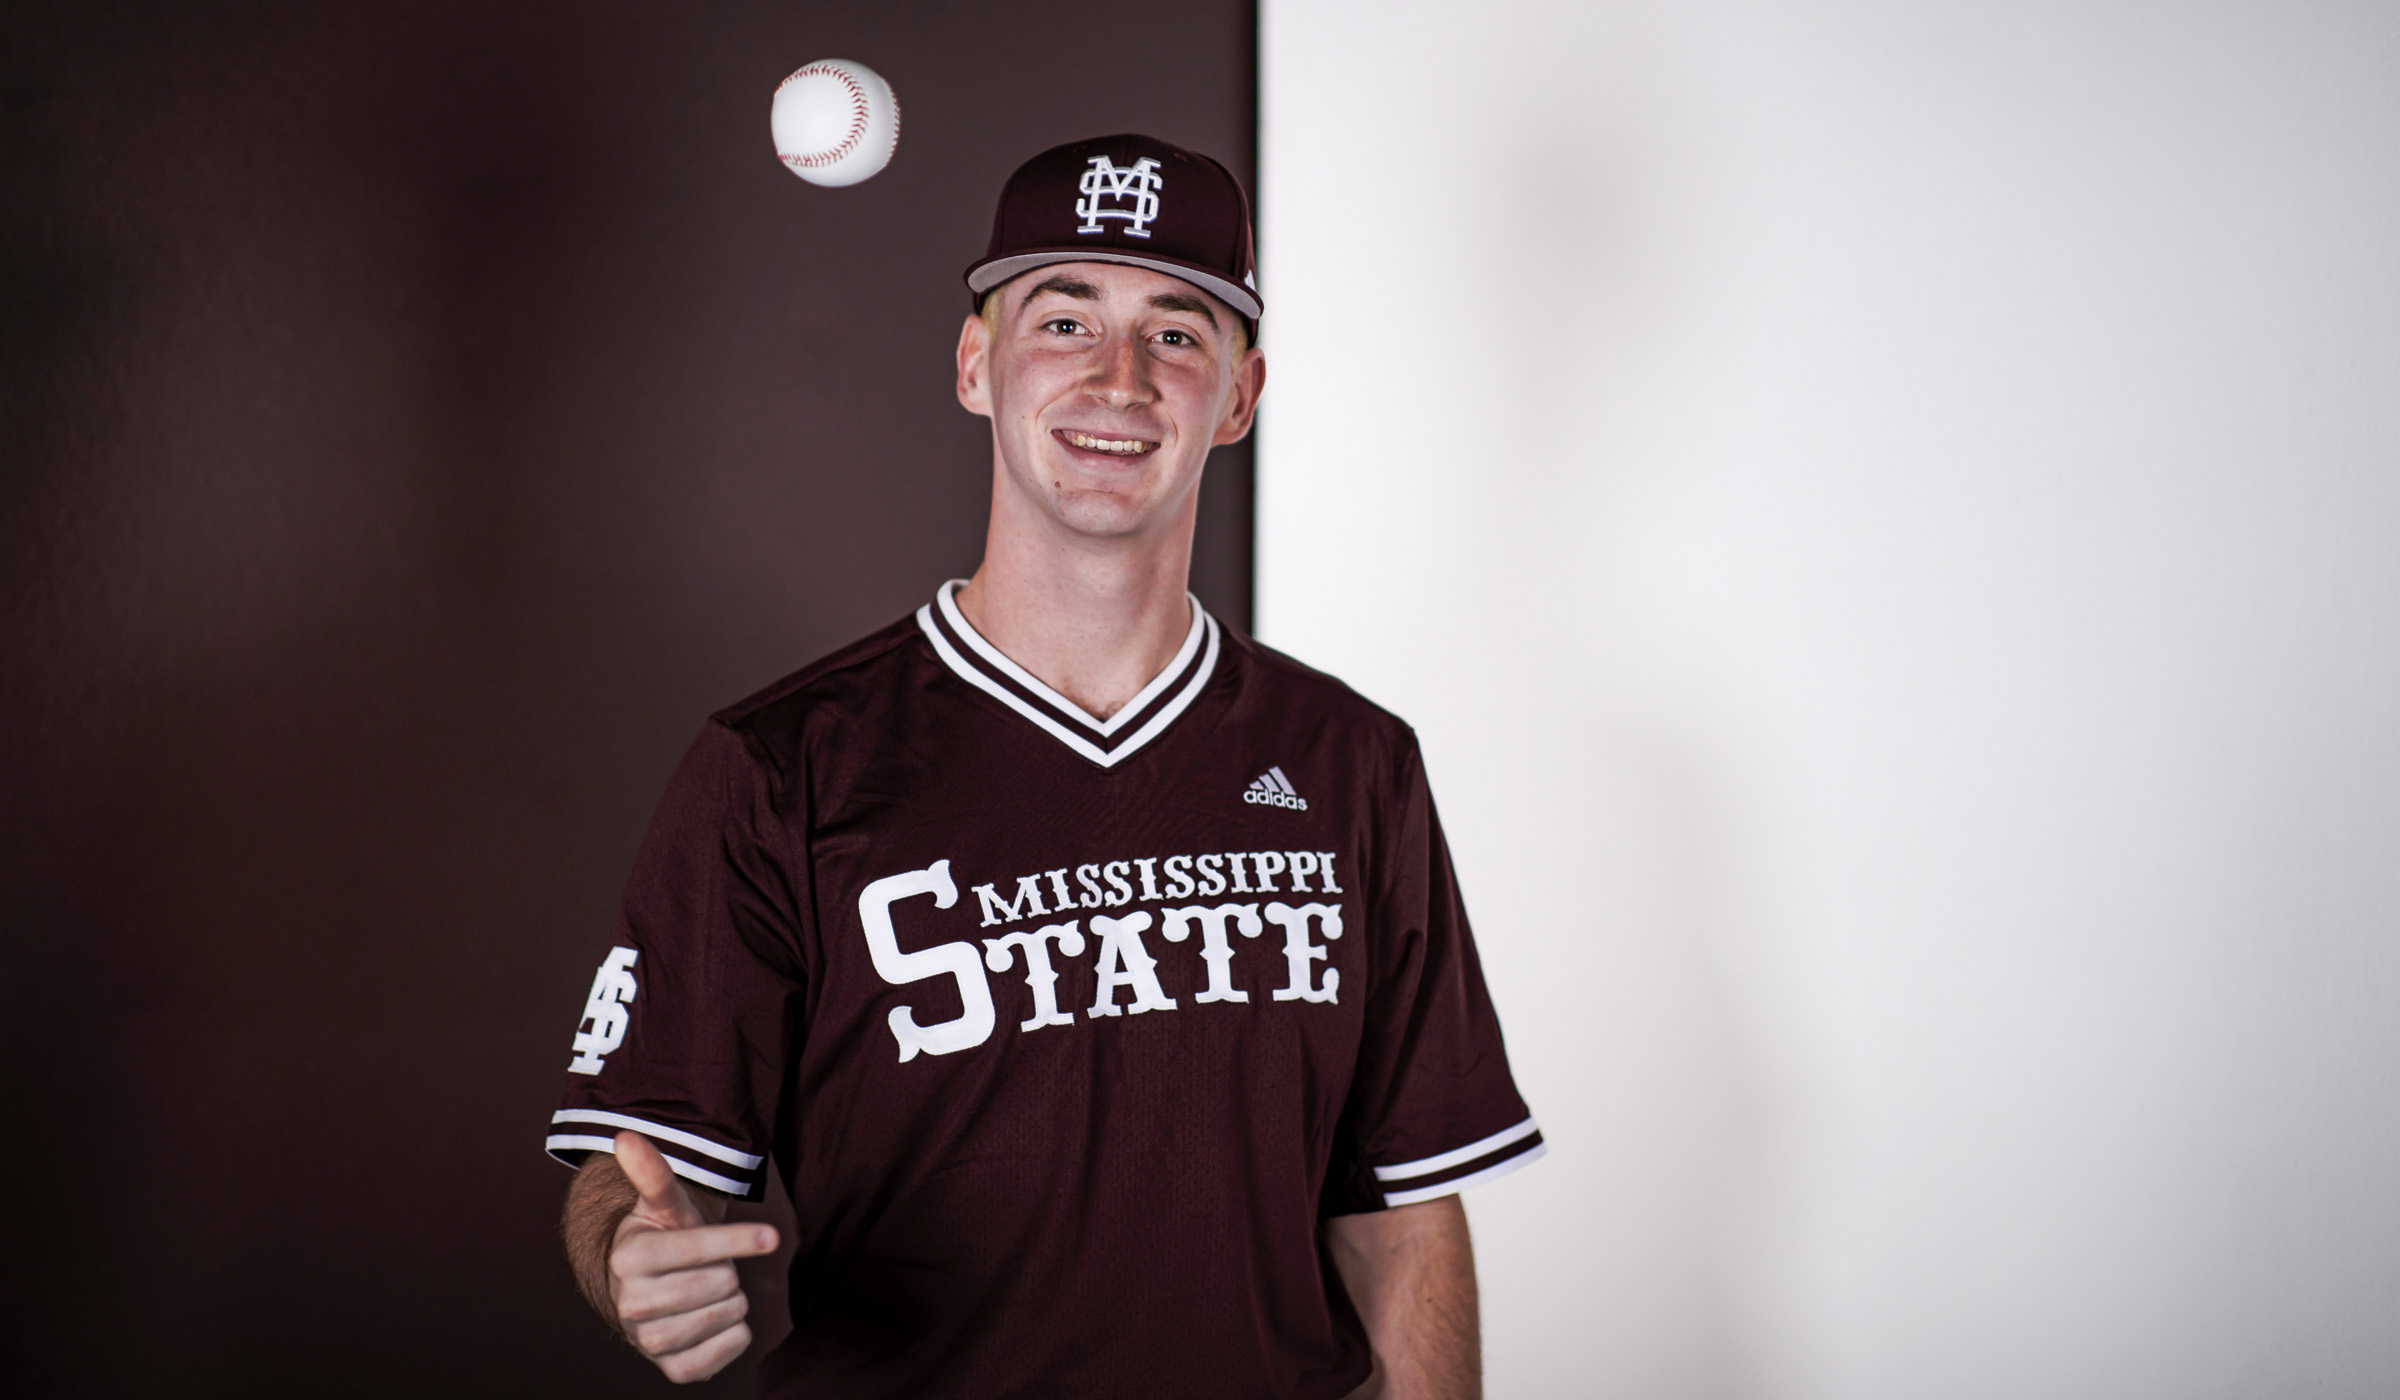 Nate Dohm, pictured wearing a baseball uniform in a photo studio